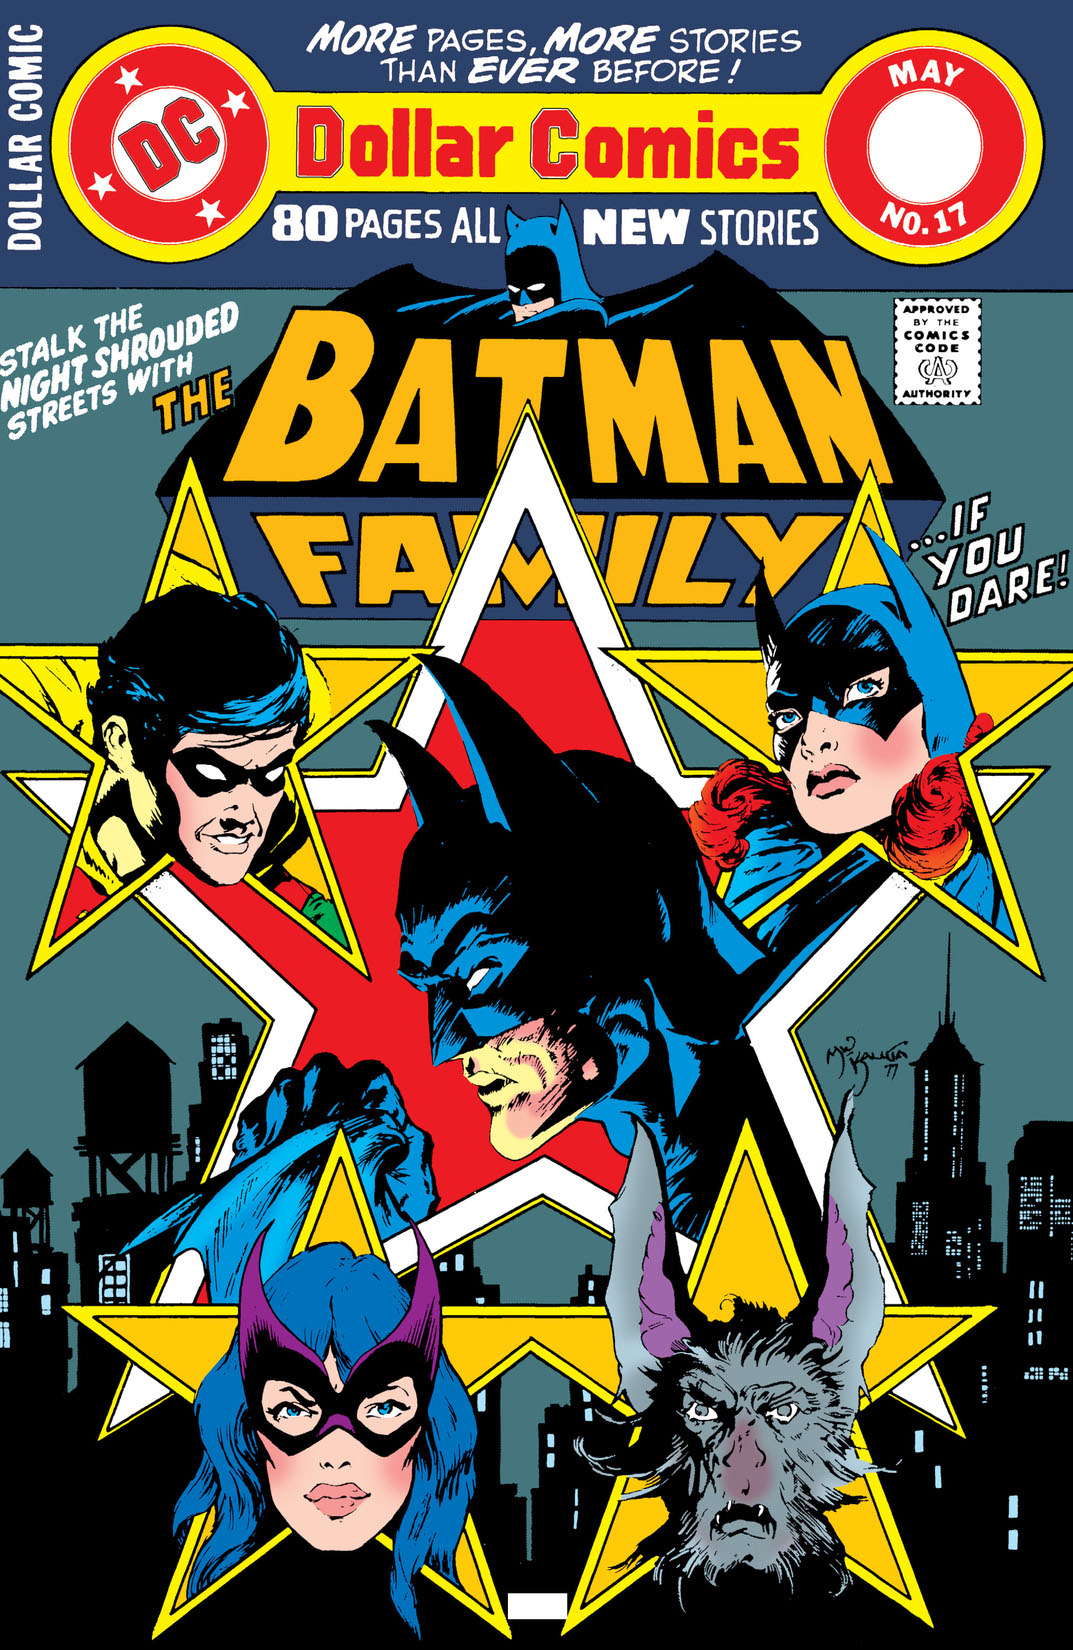 Batman Family #17 preview images